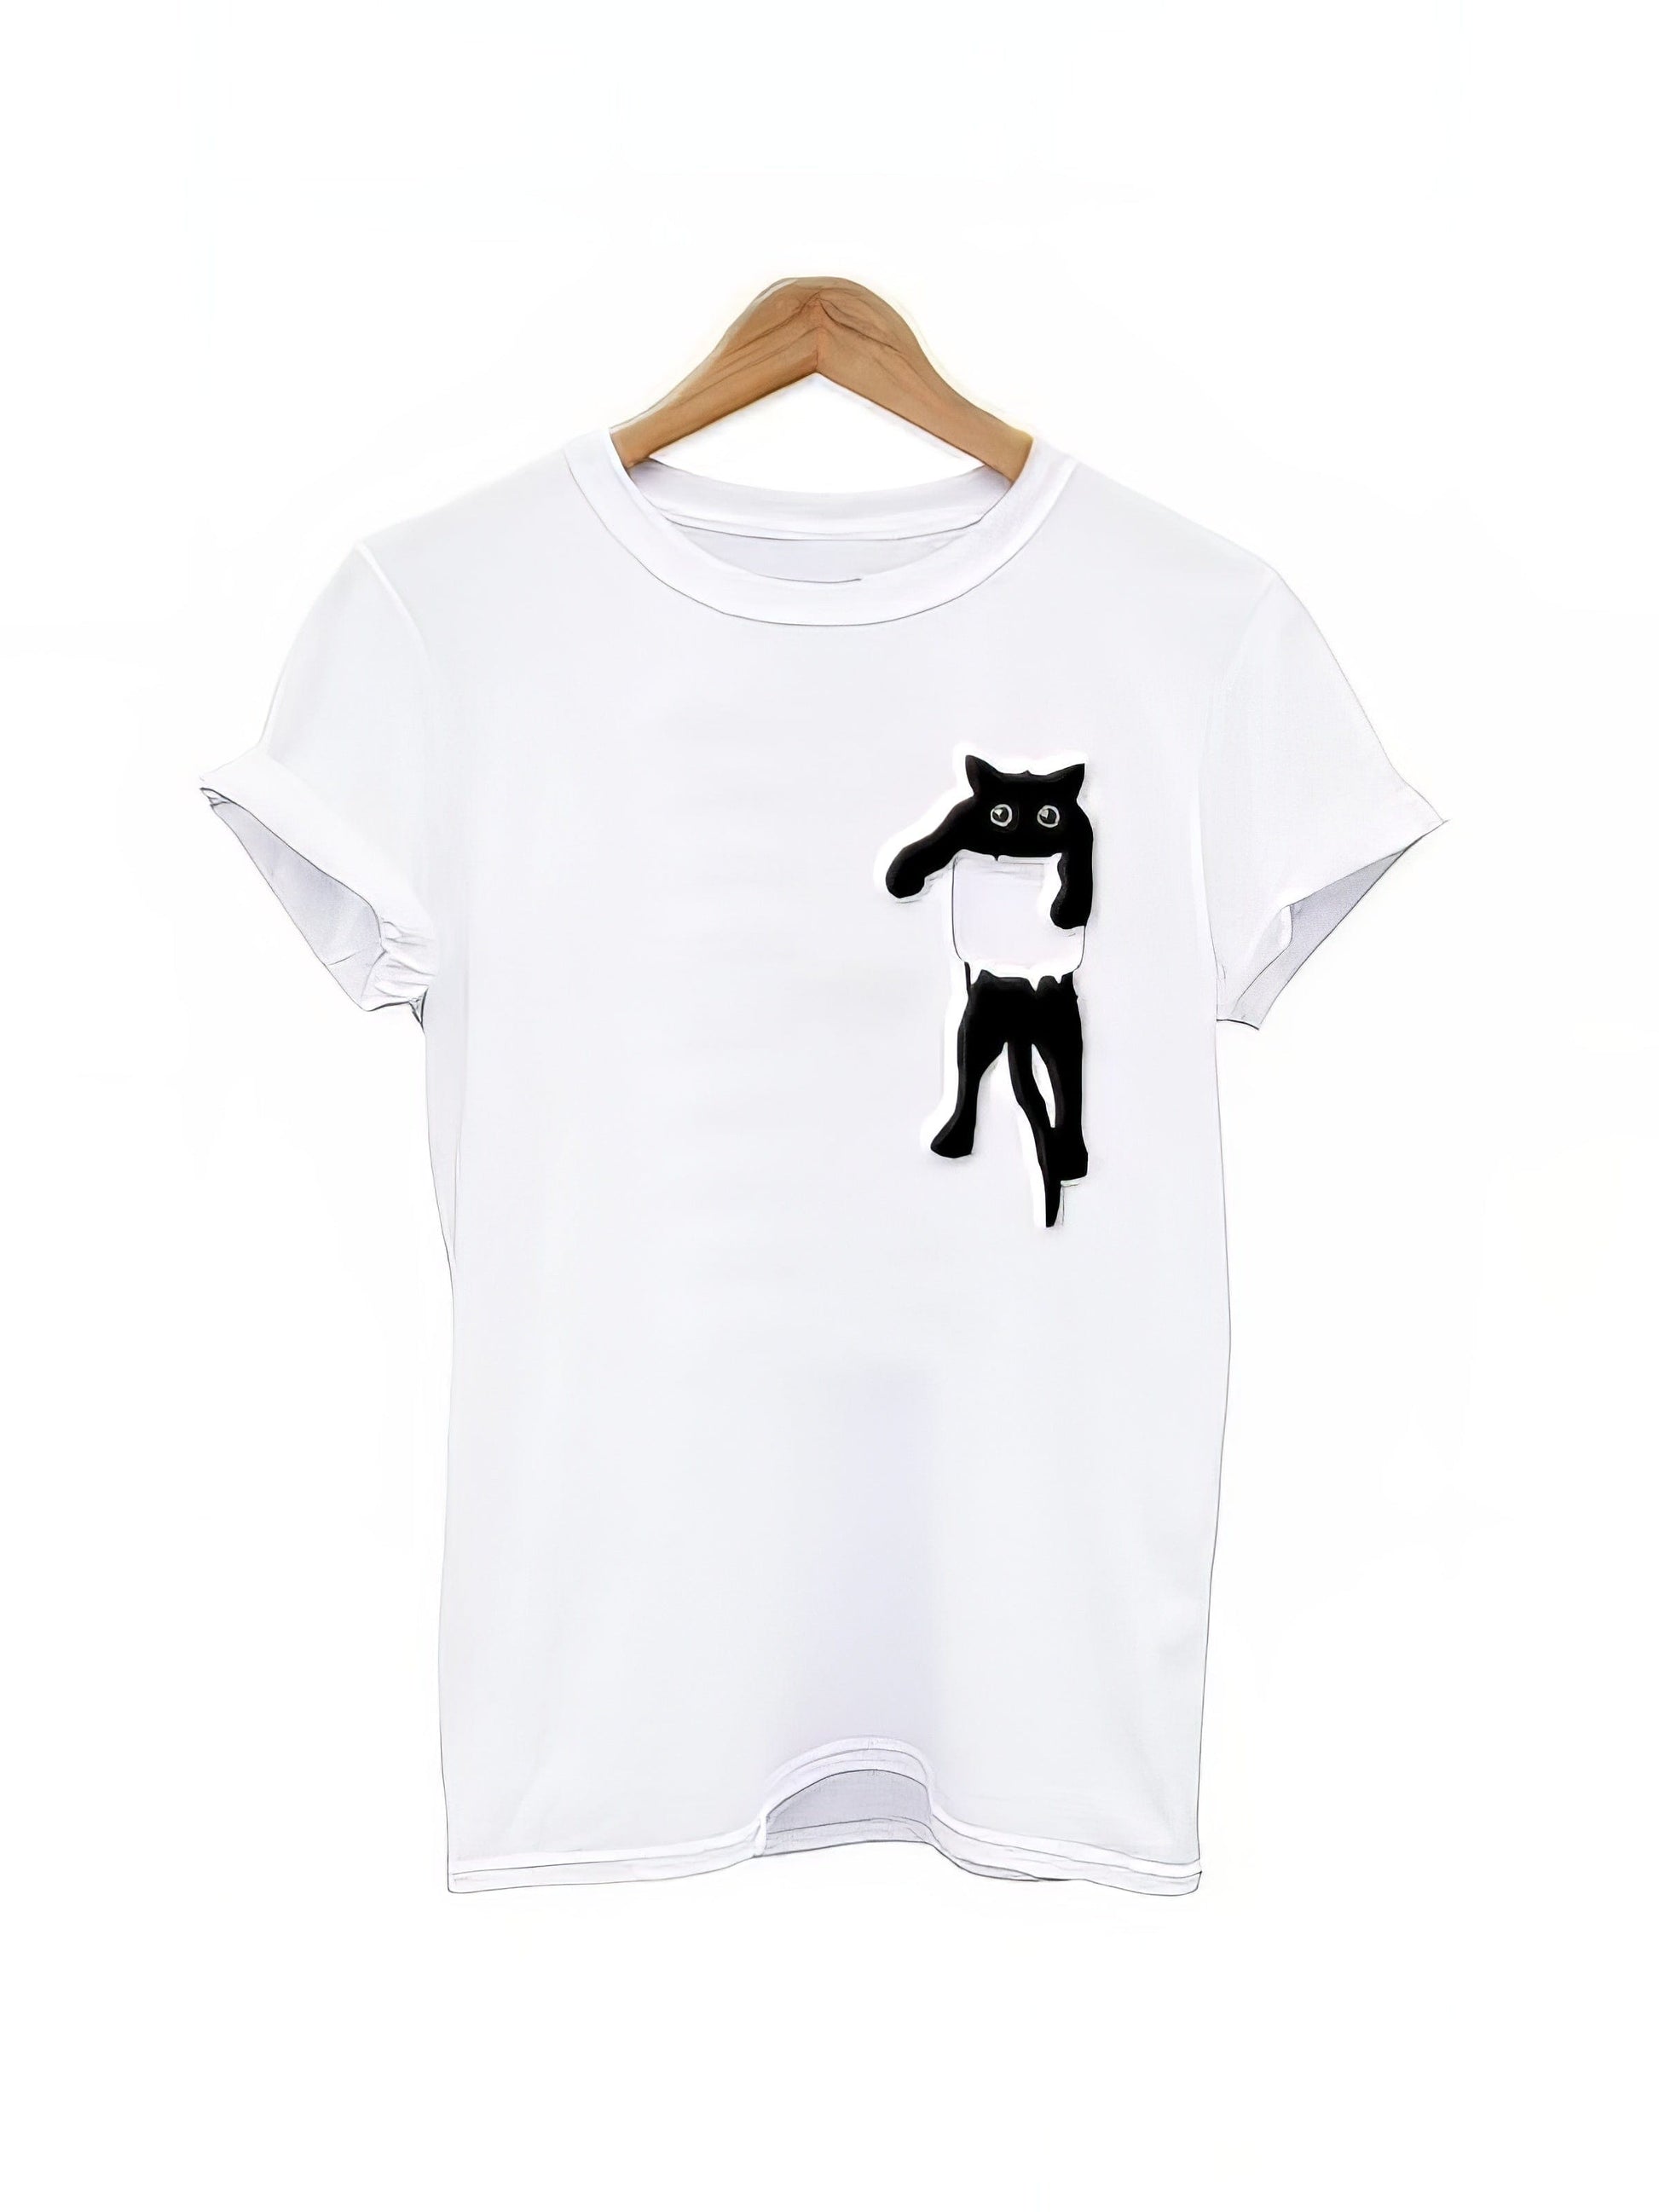 Pocket Cat T-shirt Women's Cute Black Kitty TSH210326328WHIS White / 2 (S)